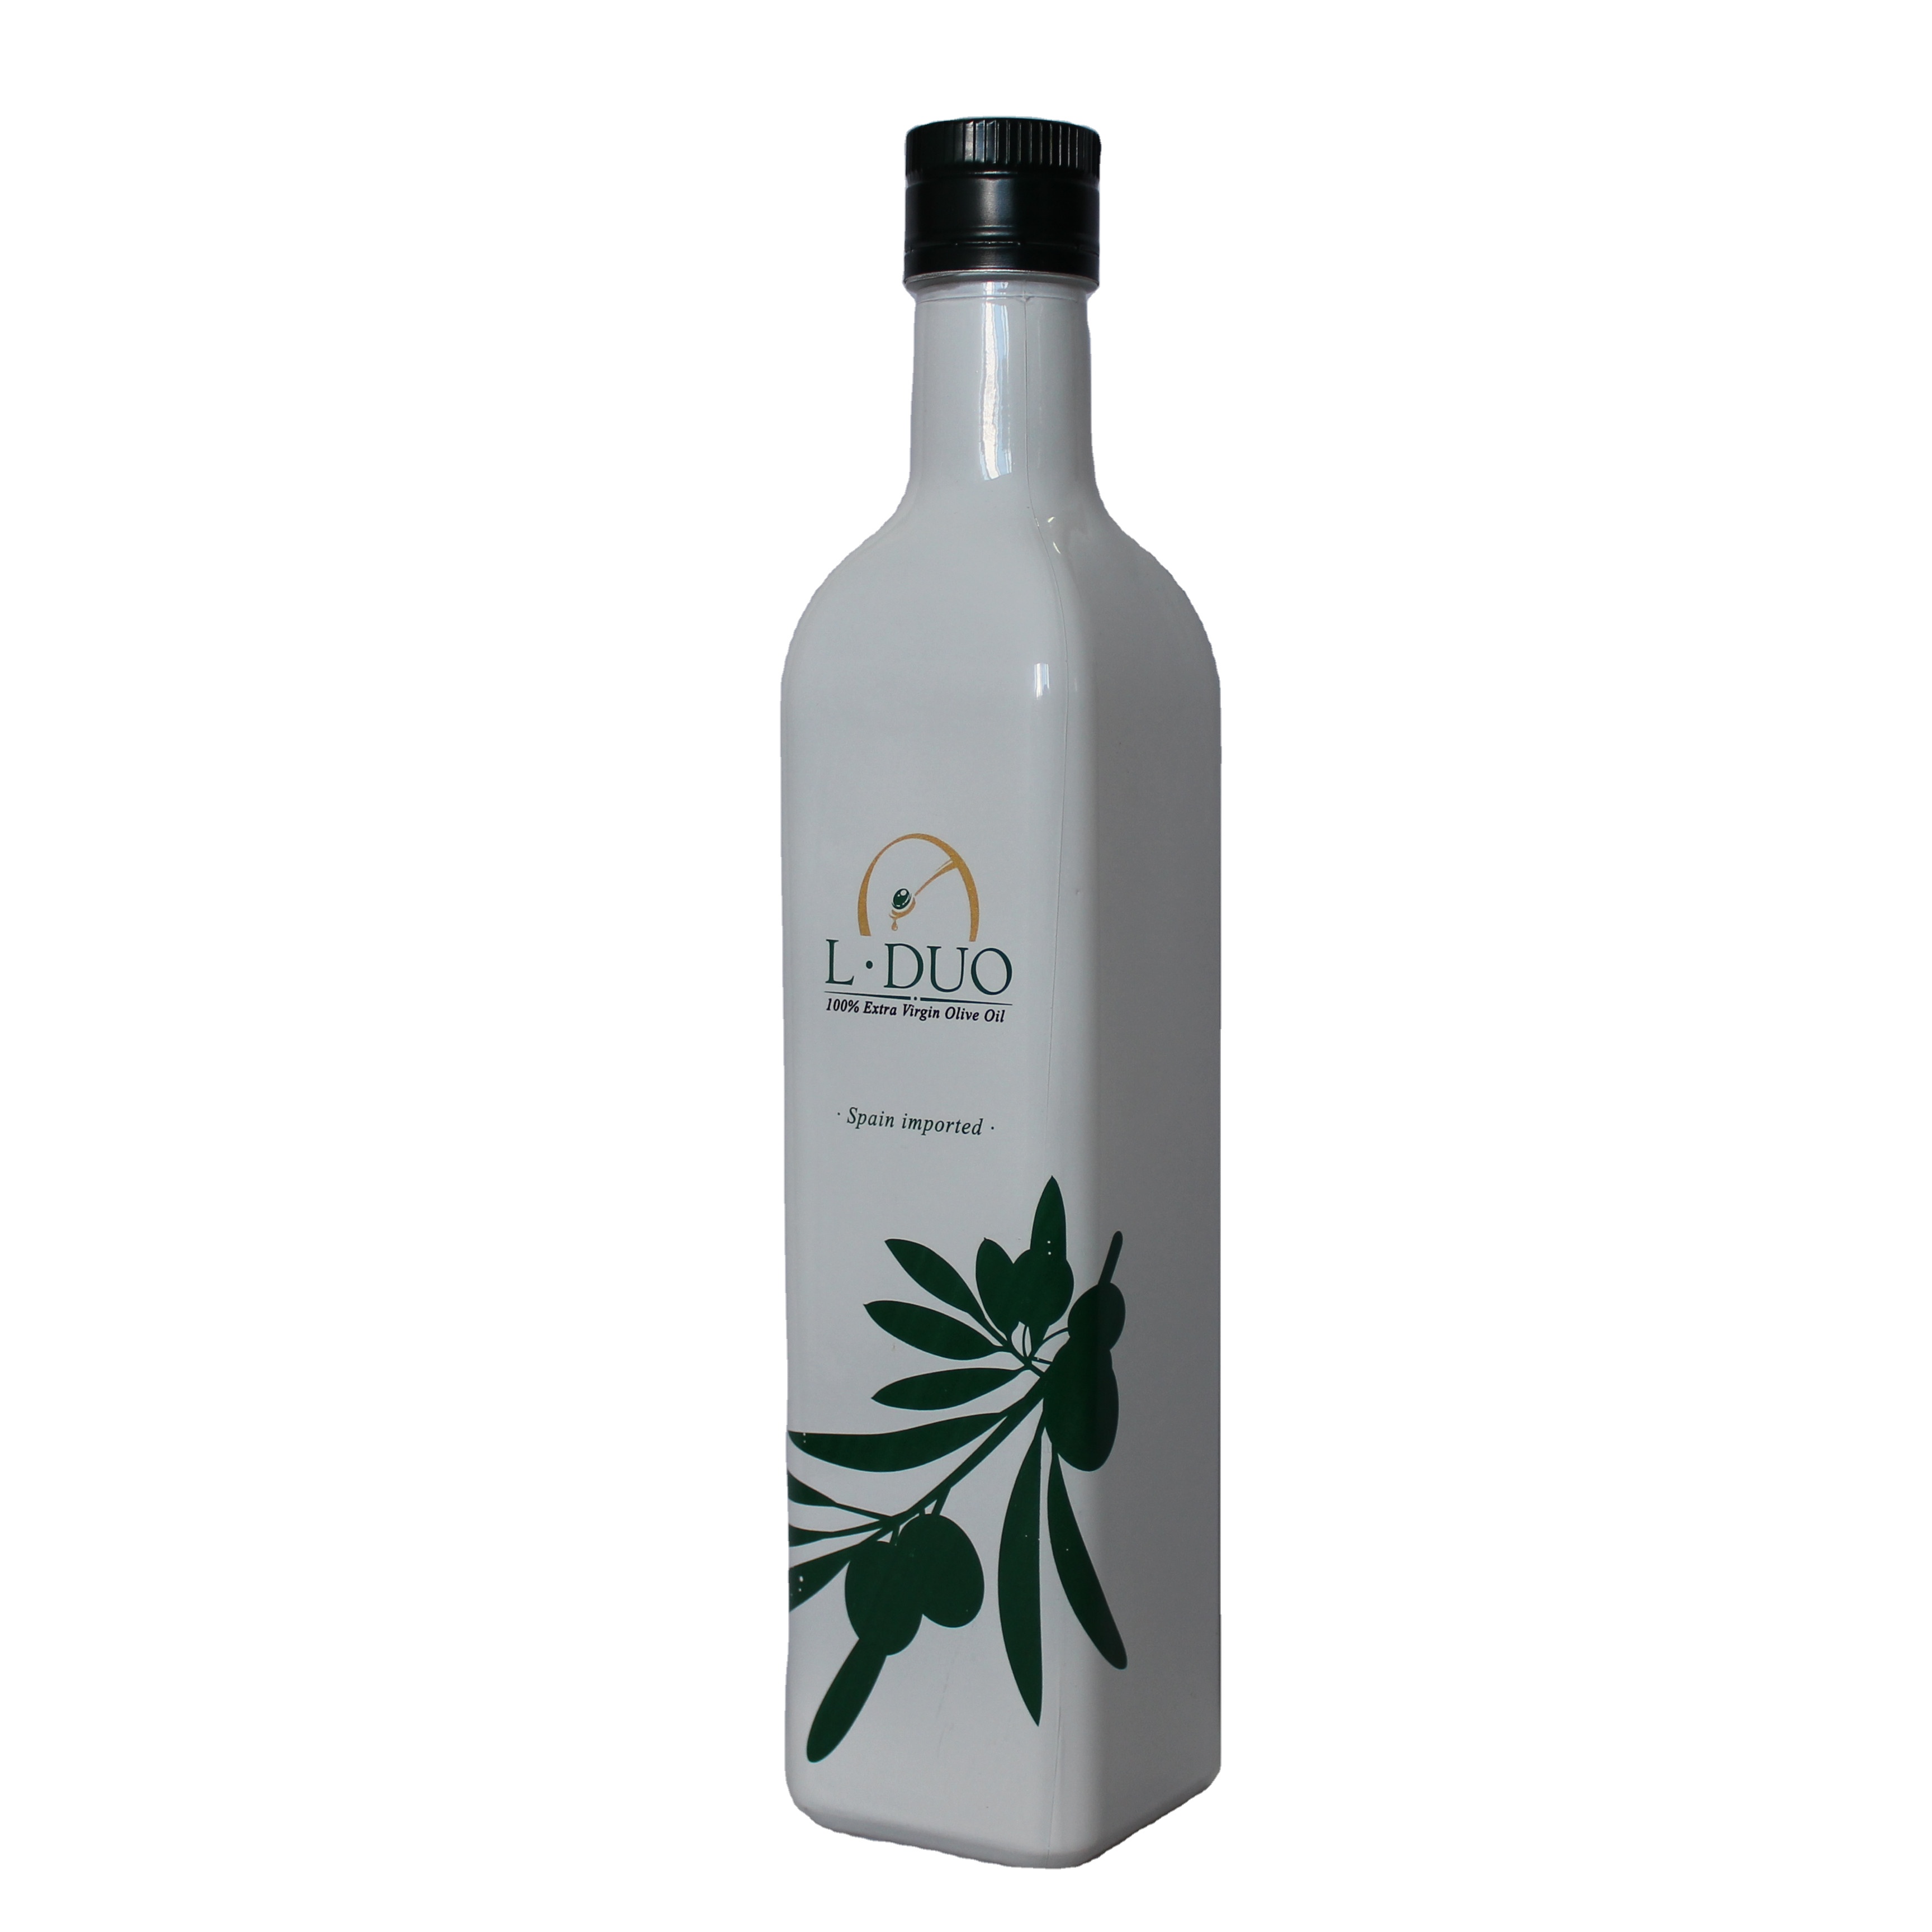 Top grade colour spray olive oil glass bottle